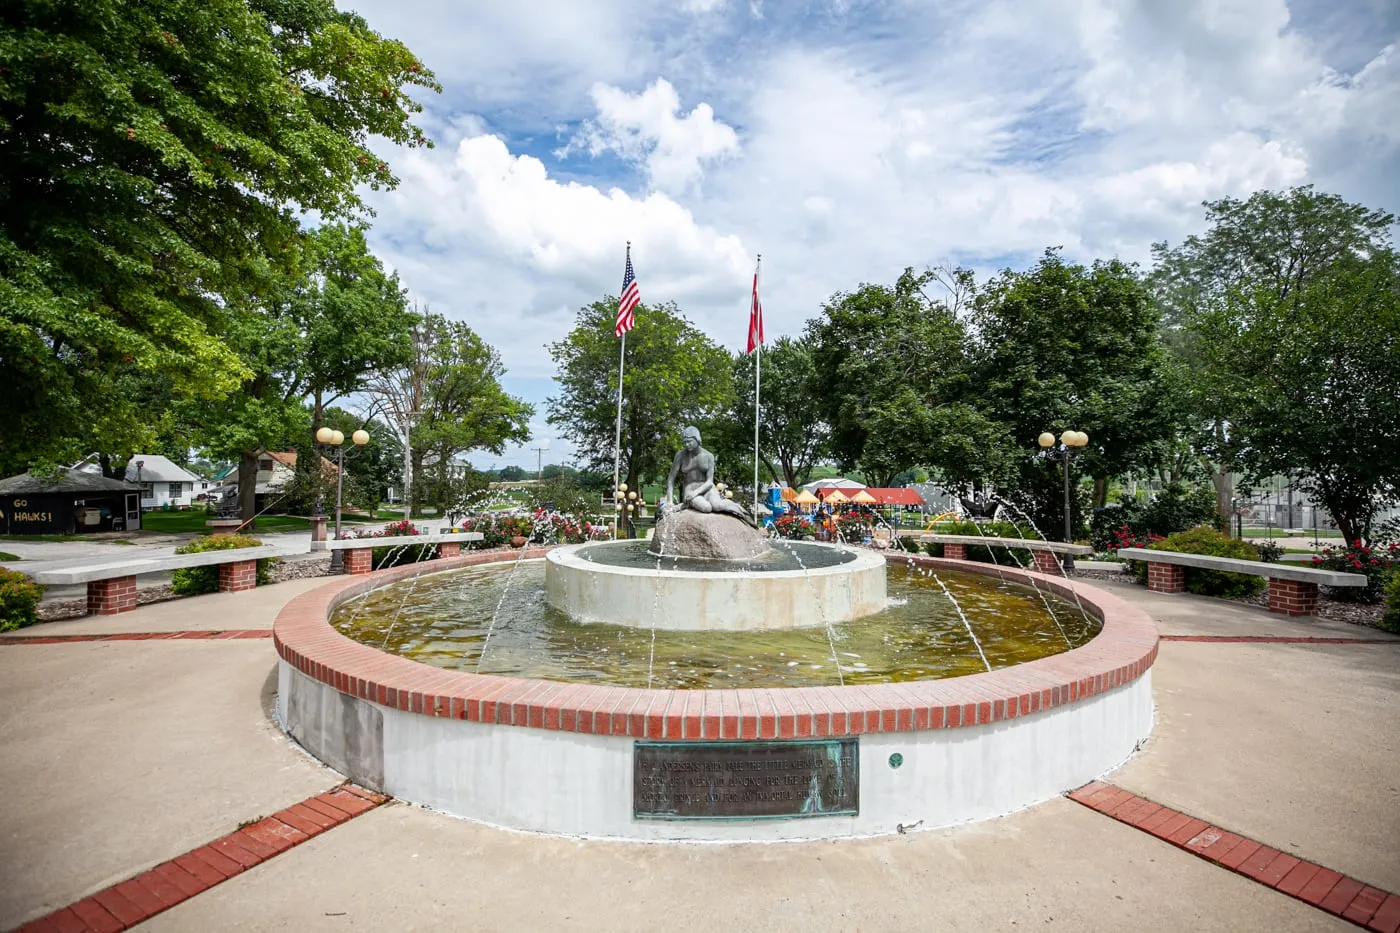 The Little Mermaid Fountain in Kimballton, Iowa | Little Mermaid Statue roadside attraction in Iowa